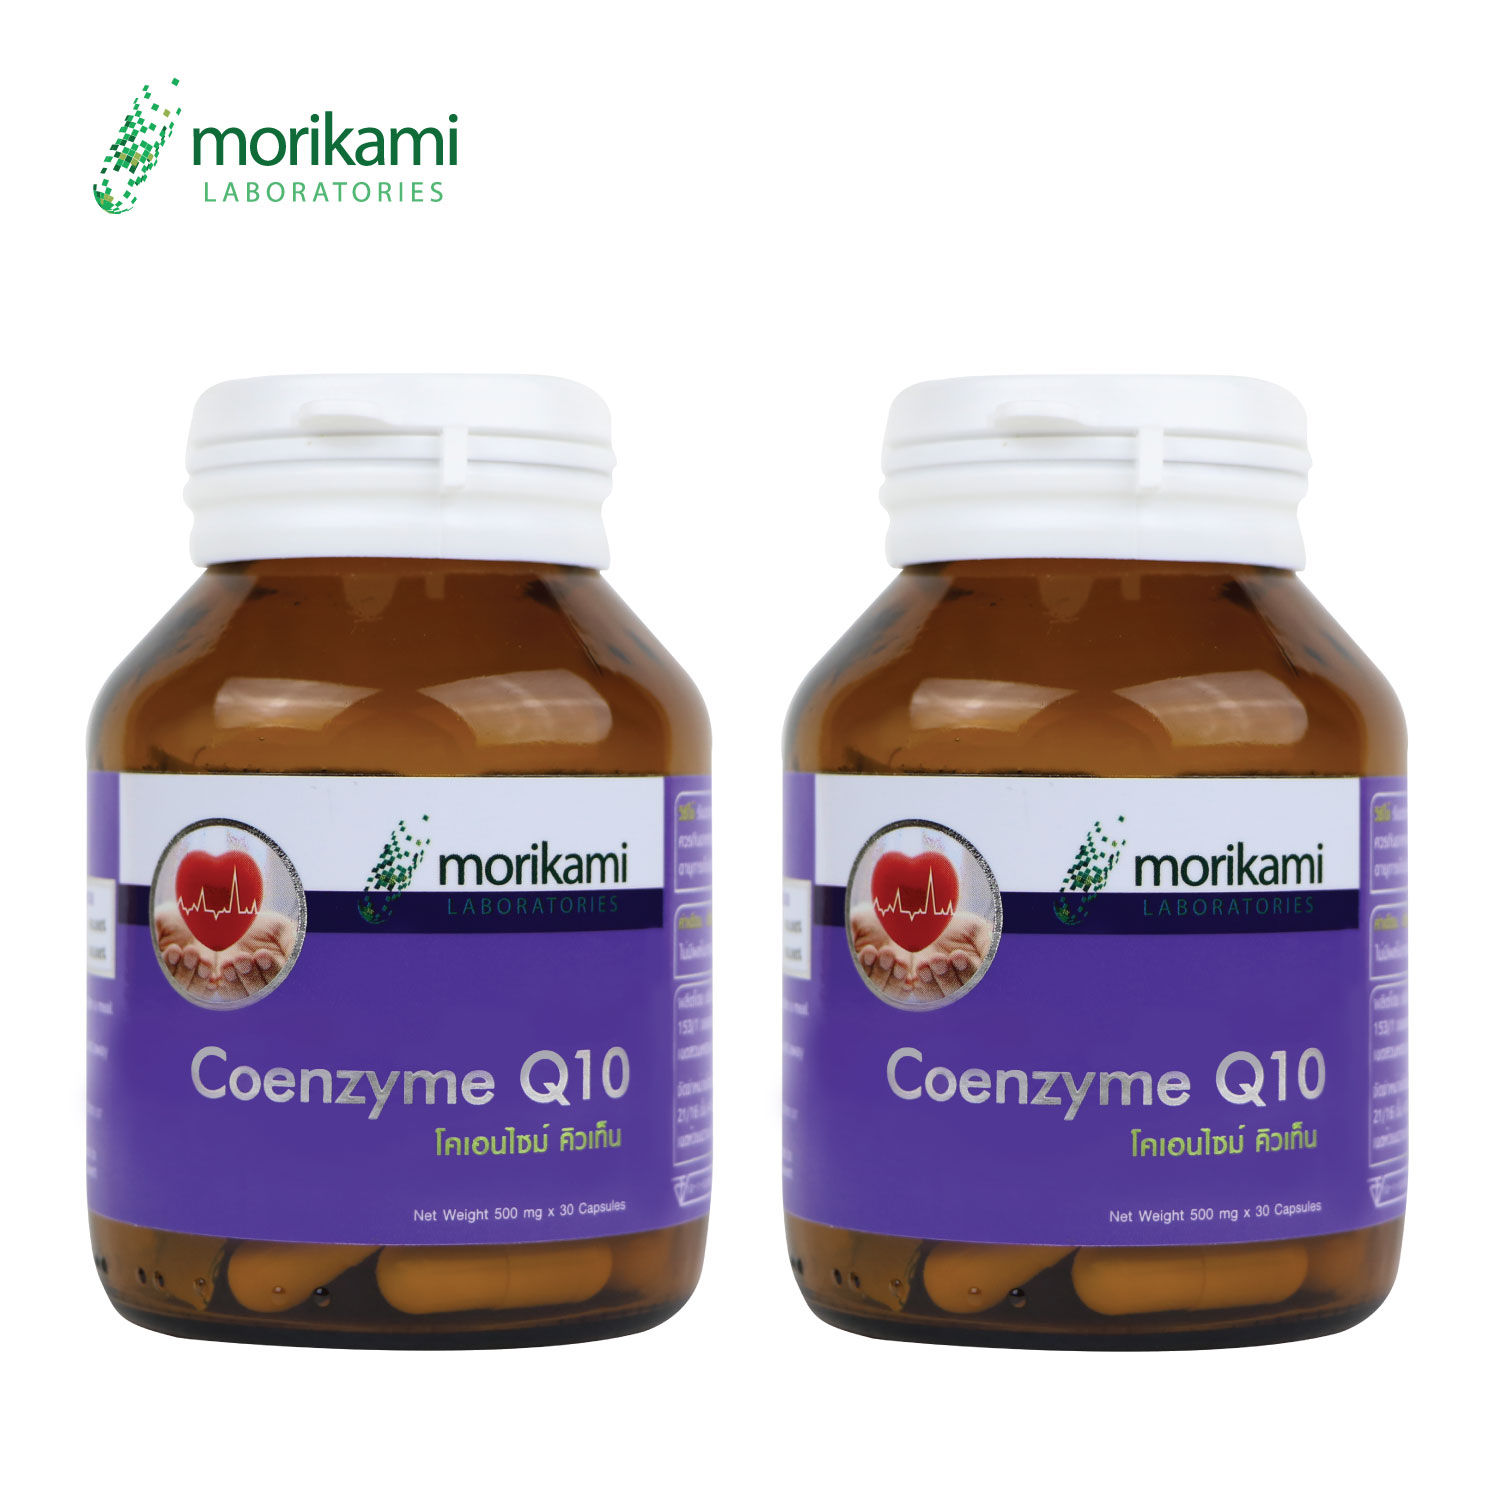 Q10 x 2 ขวด Morikami Laboratories Coenzyme Q10 คิวเท็น โมริคามิ ลาบอราทอรีส์ ผลิตภัณฑ์เสริมอาหาร พรีเมียมเกรด แหล่งพลังงานงานของเซลล์